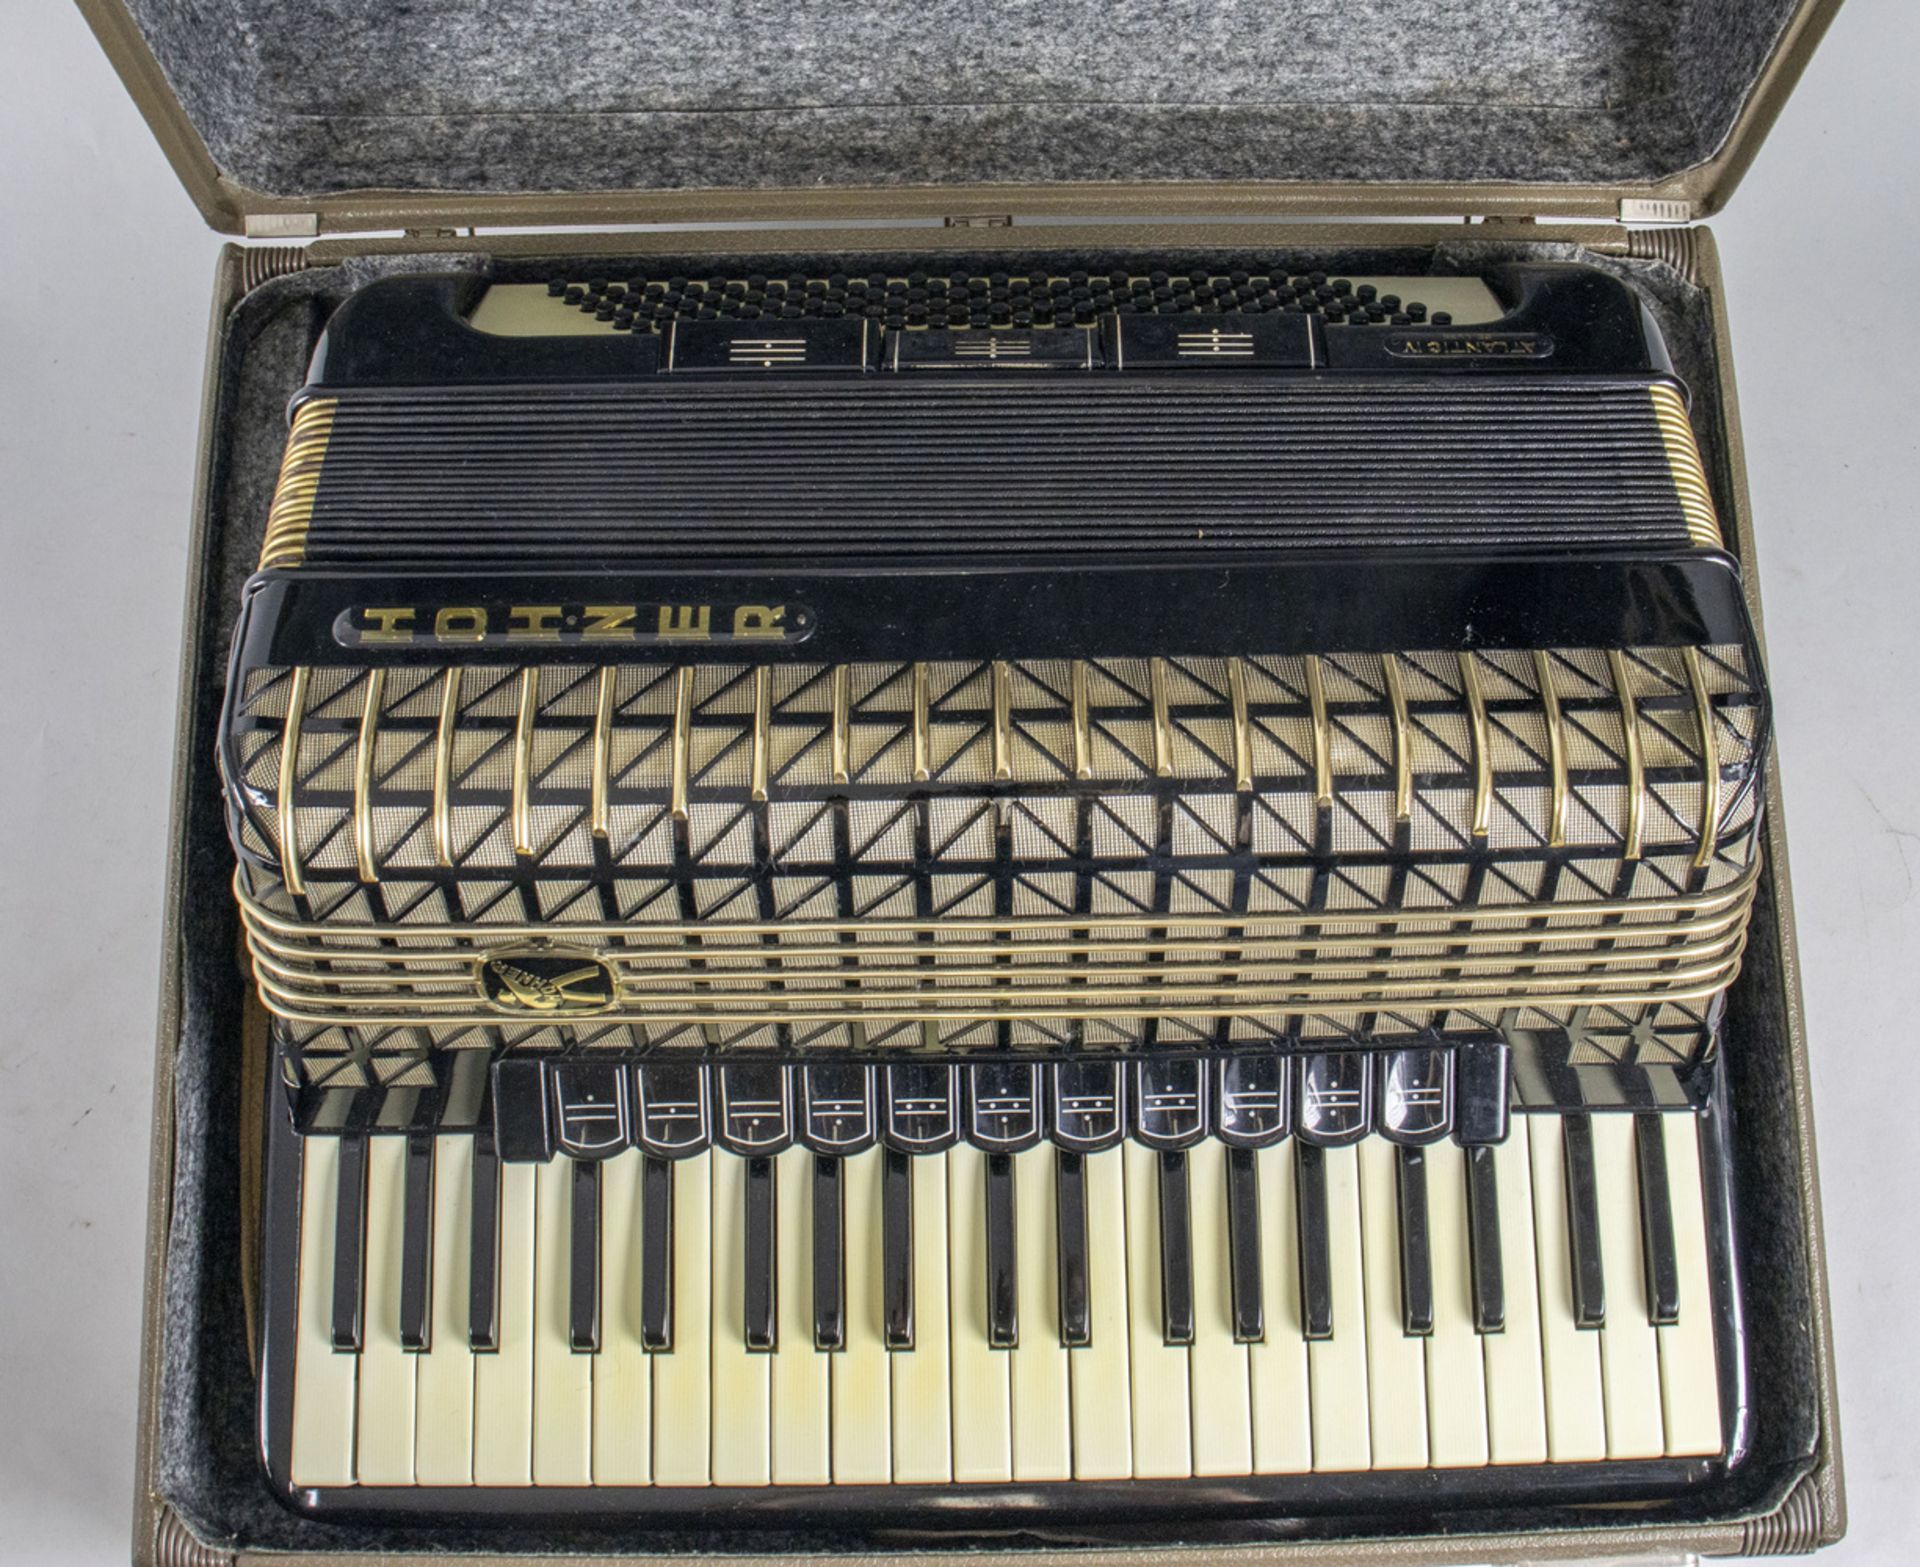 Akkordeon 'Club III B' / An accordion 'Club III B', Hohner